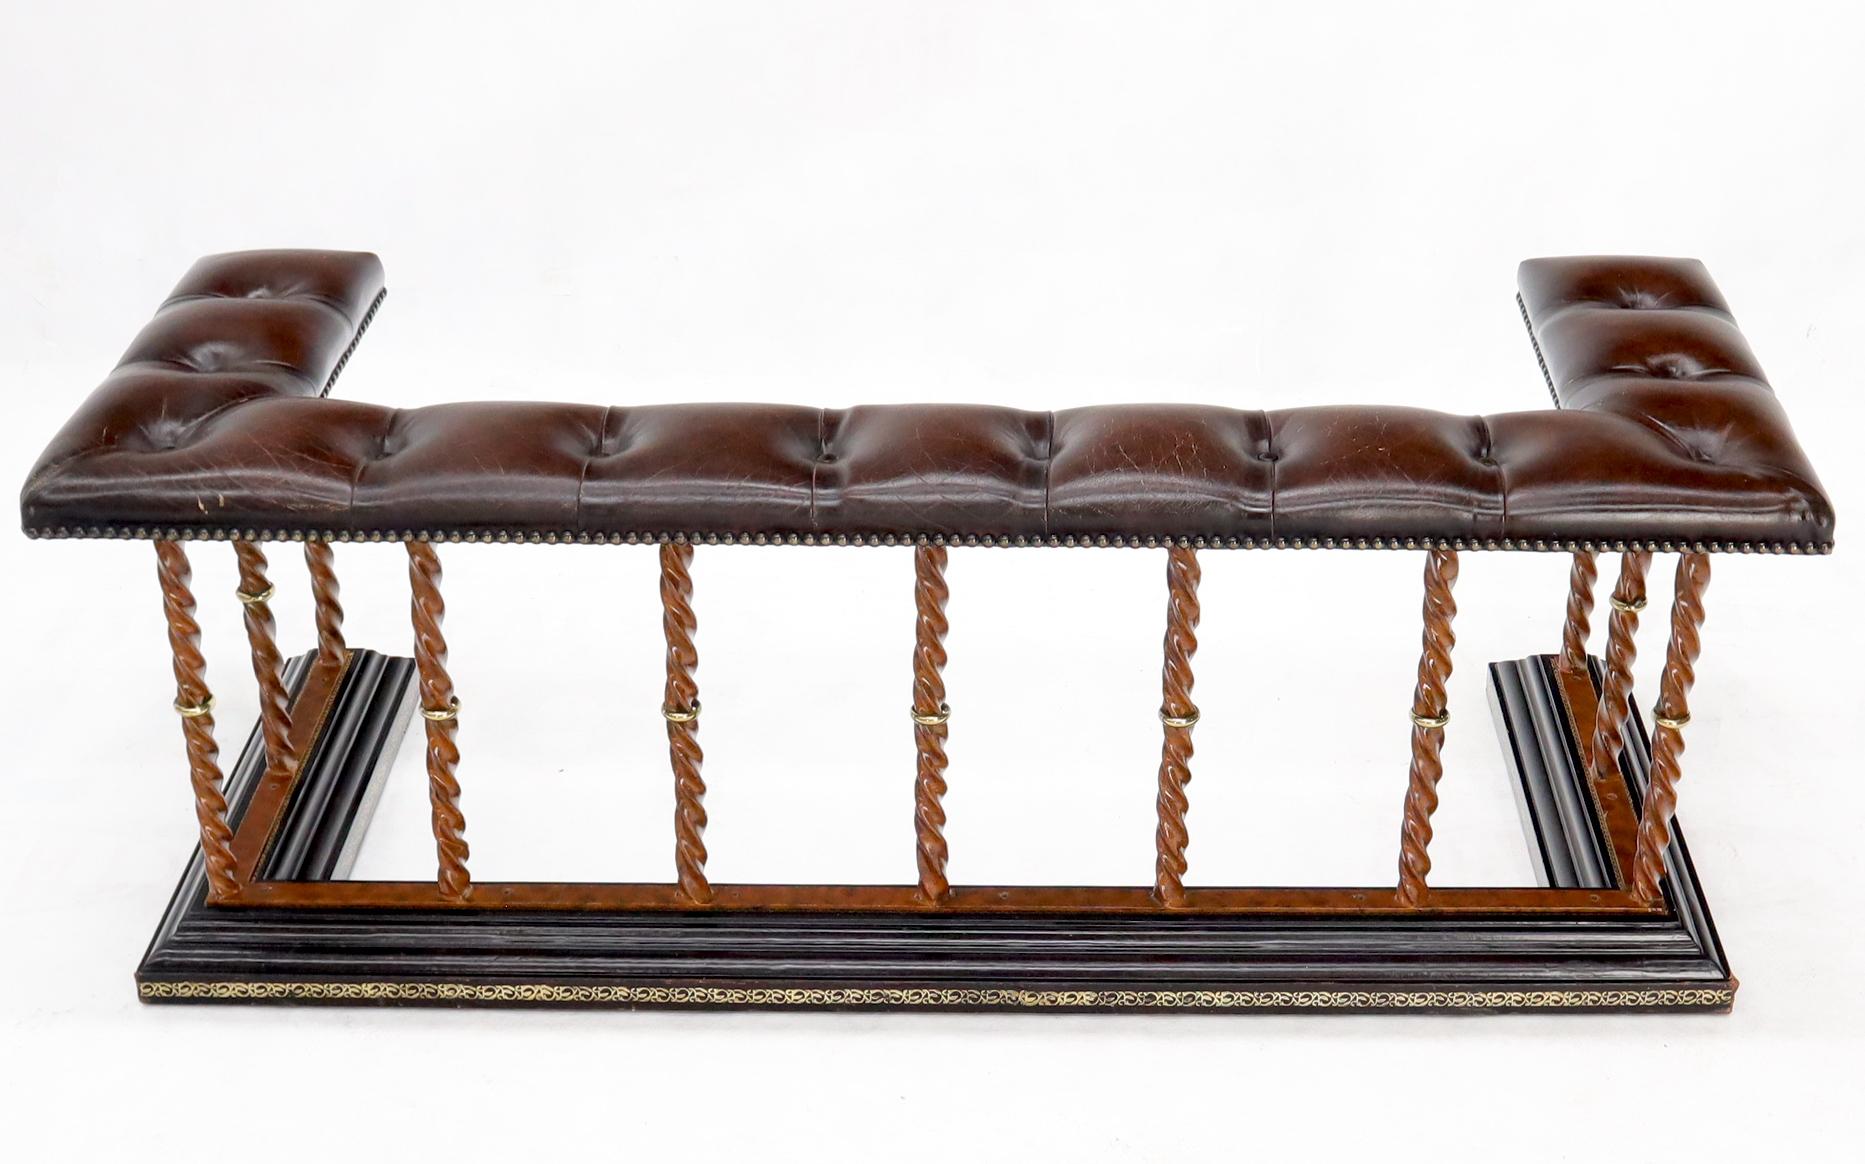 High quality tufted leather wrought iron base bracket shape fireplace bench.